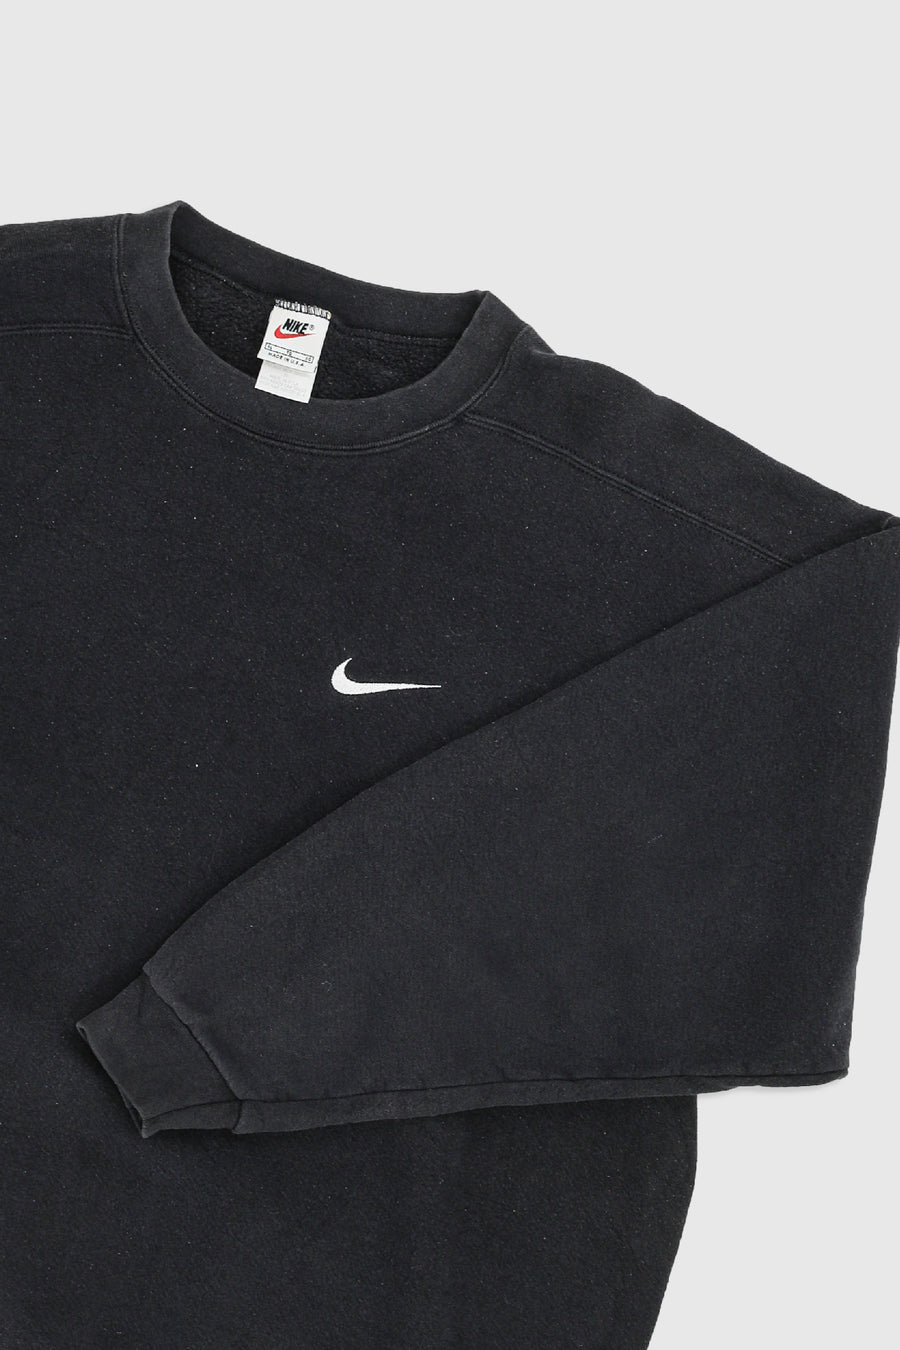 Vintage Nike Sweatshirt